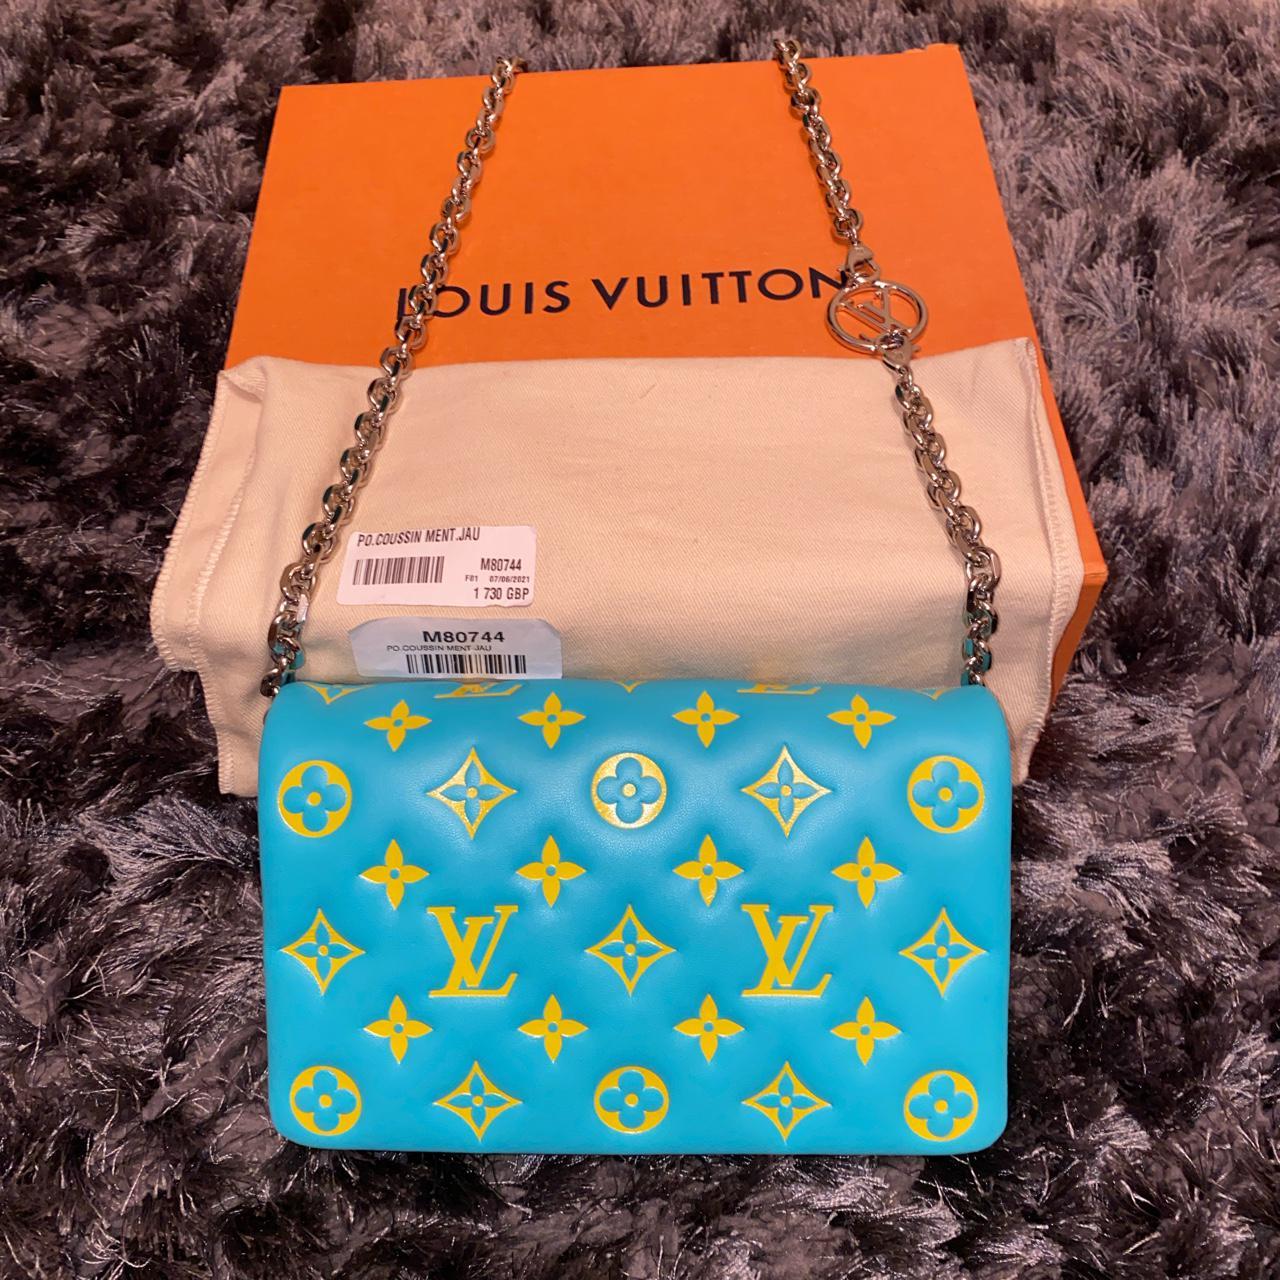 Brand new green Louis Vuitton coussin bag perfect - Depop